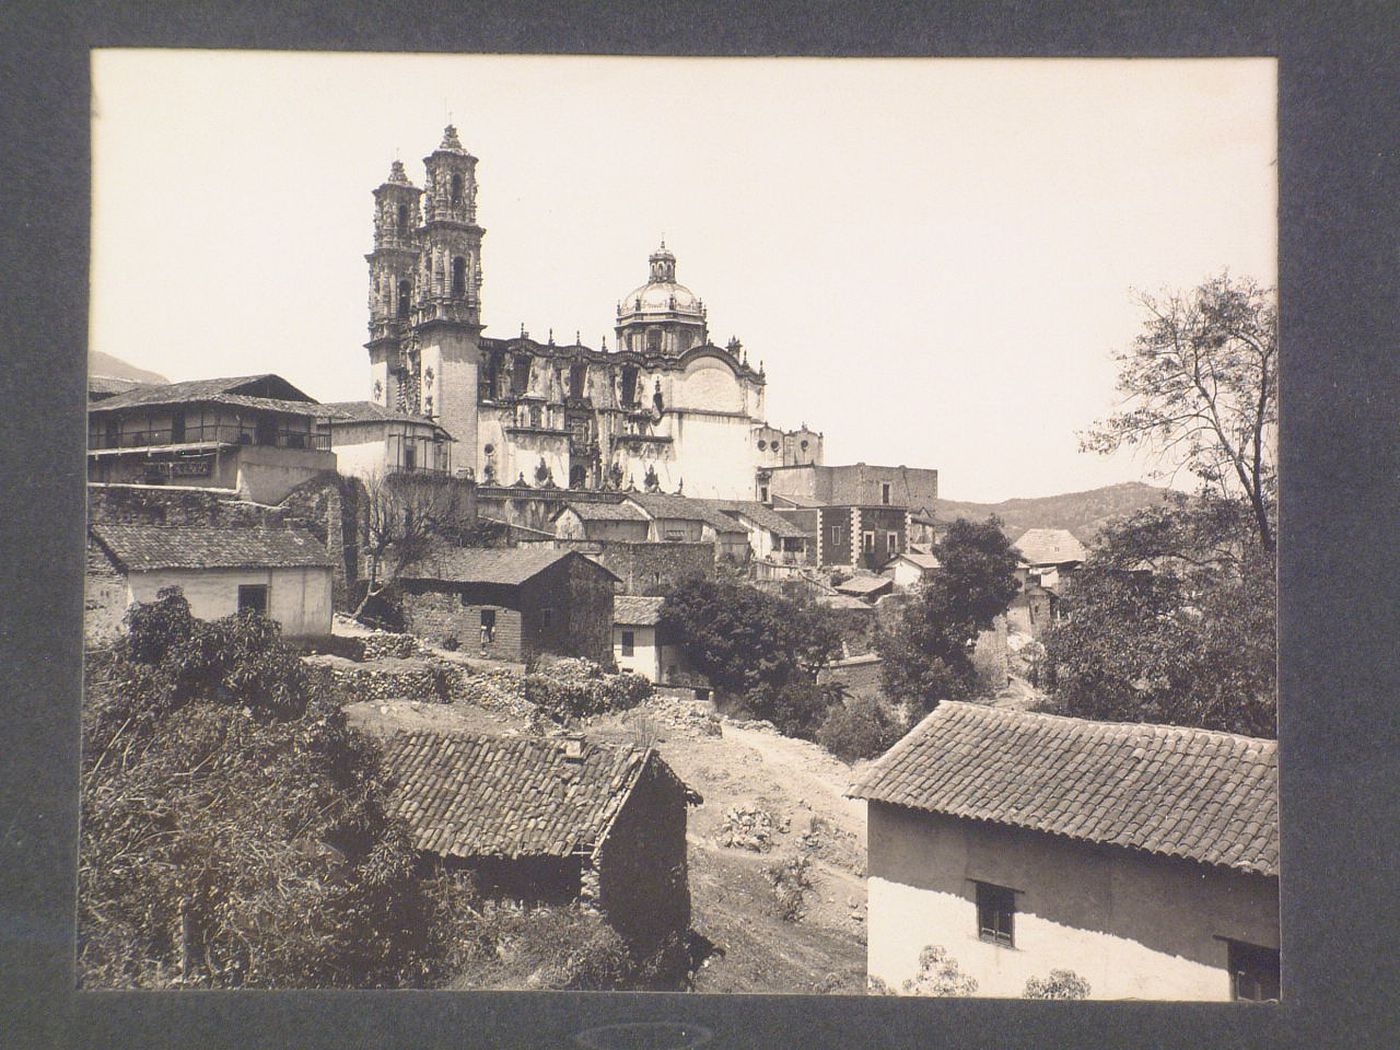 View of the city of Taxco de Alarcón and the Church of Santa Prisca, Mexico